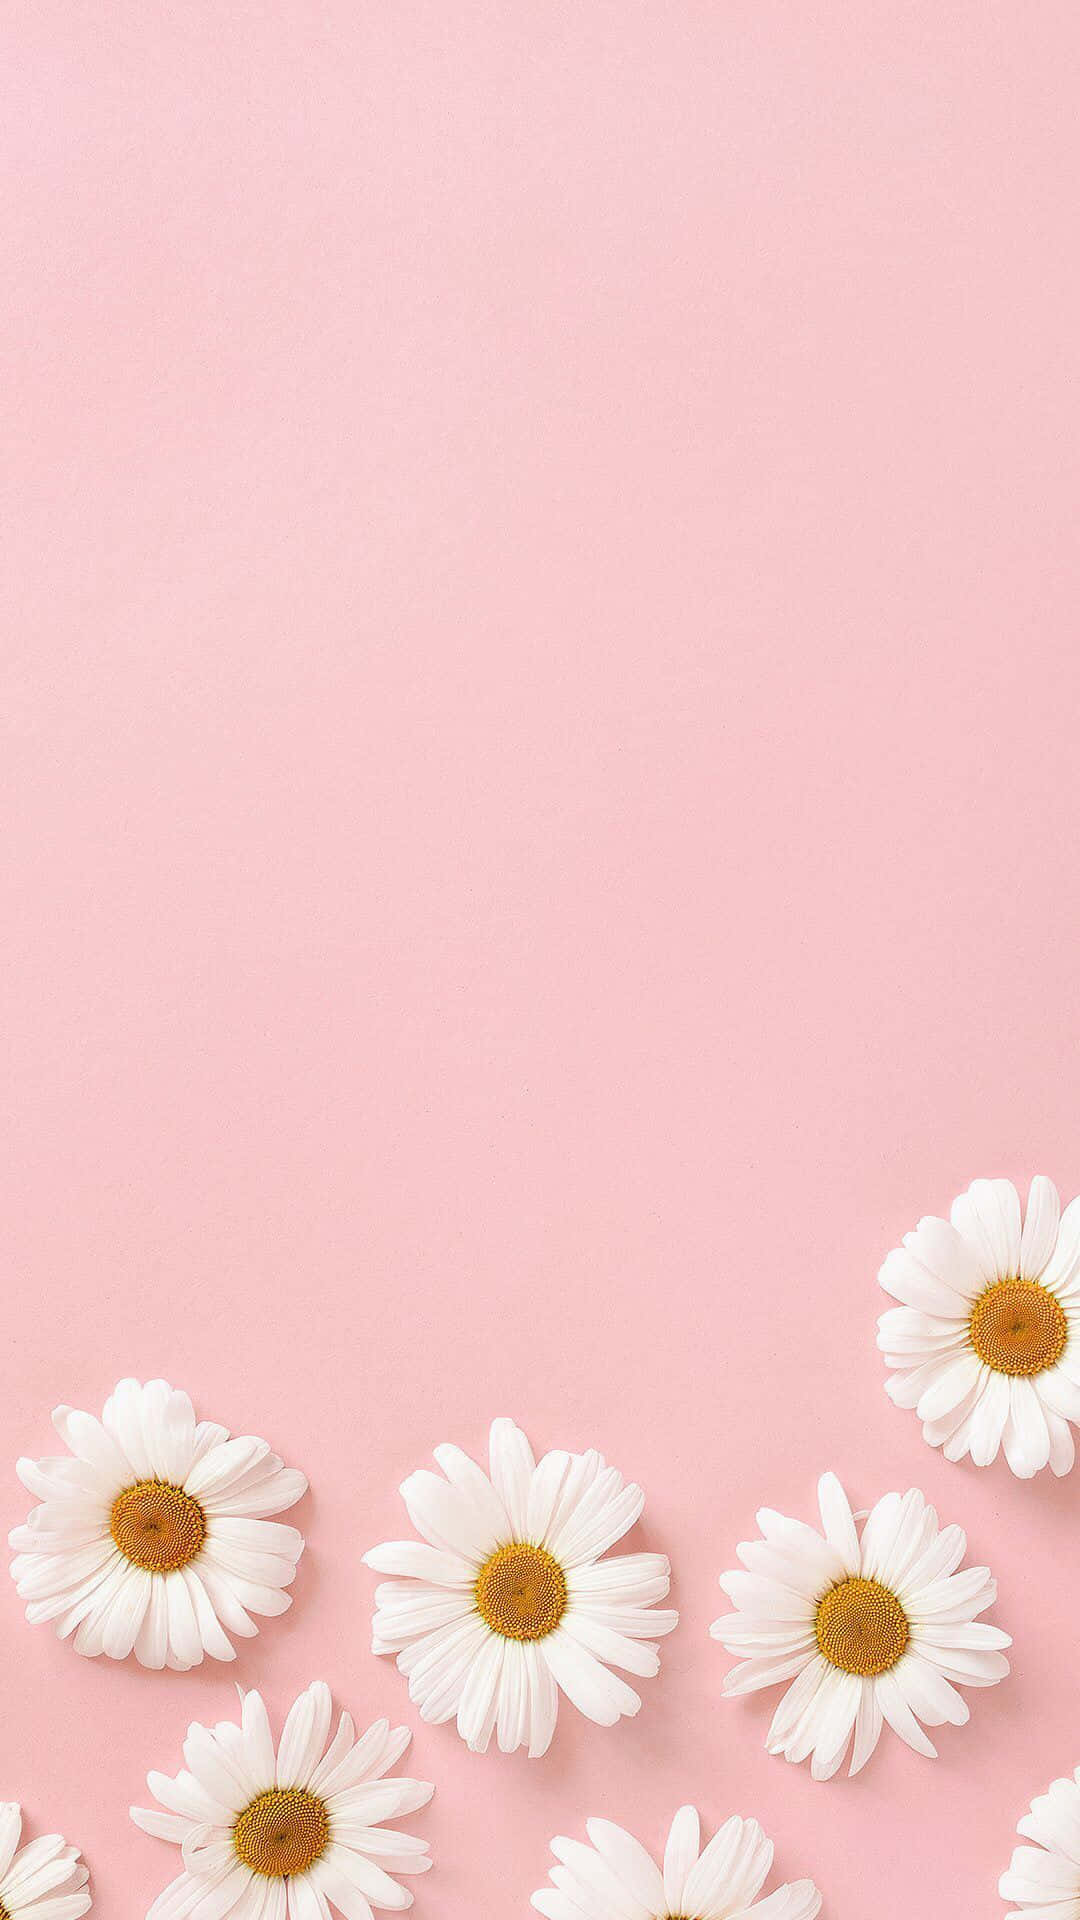 Minimalistic Pastel Pink Texture Background